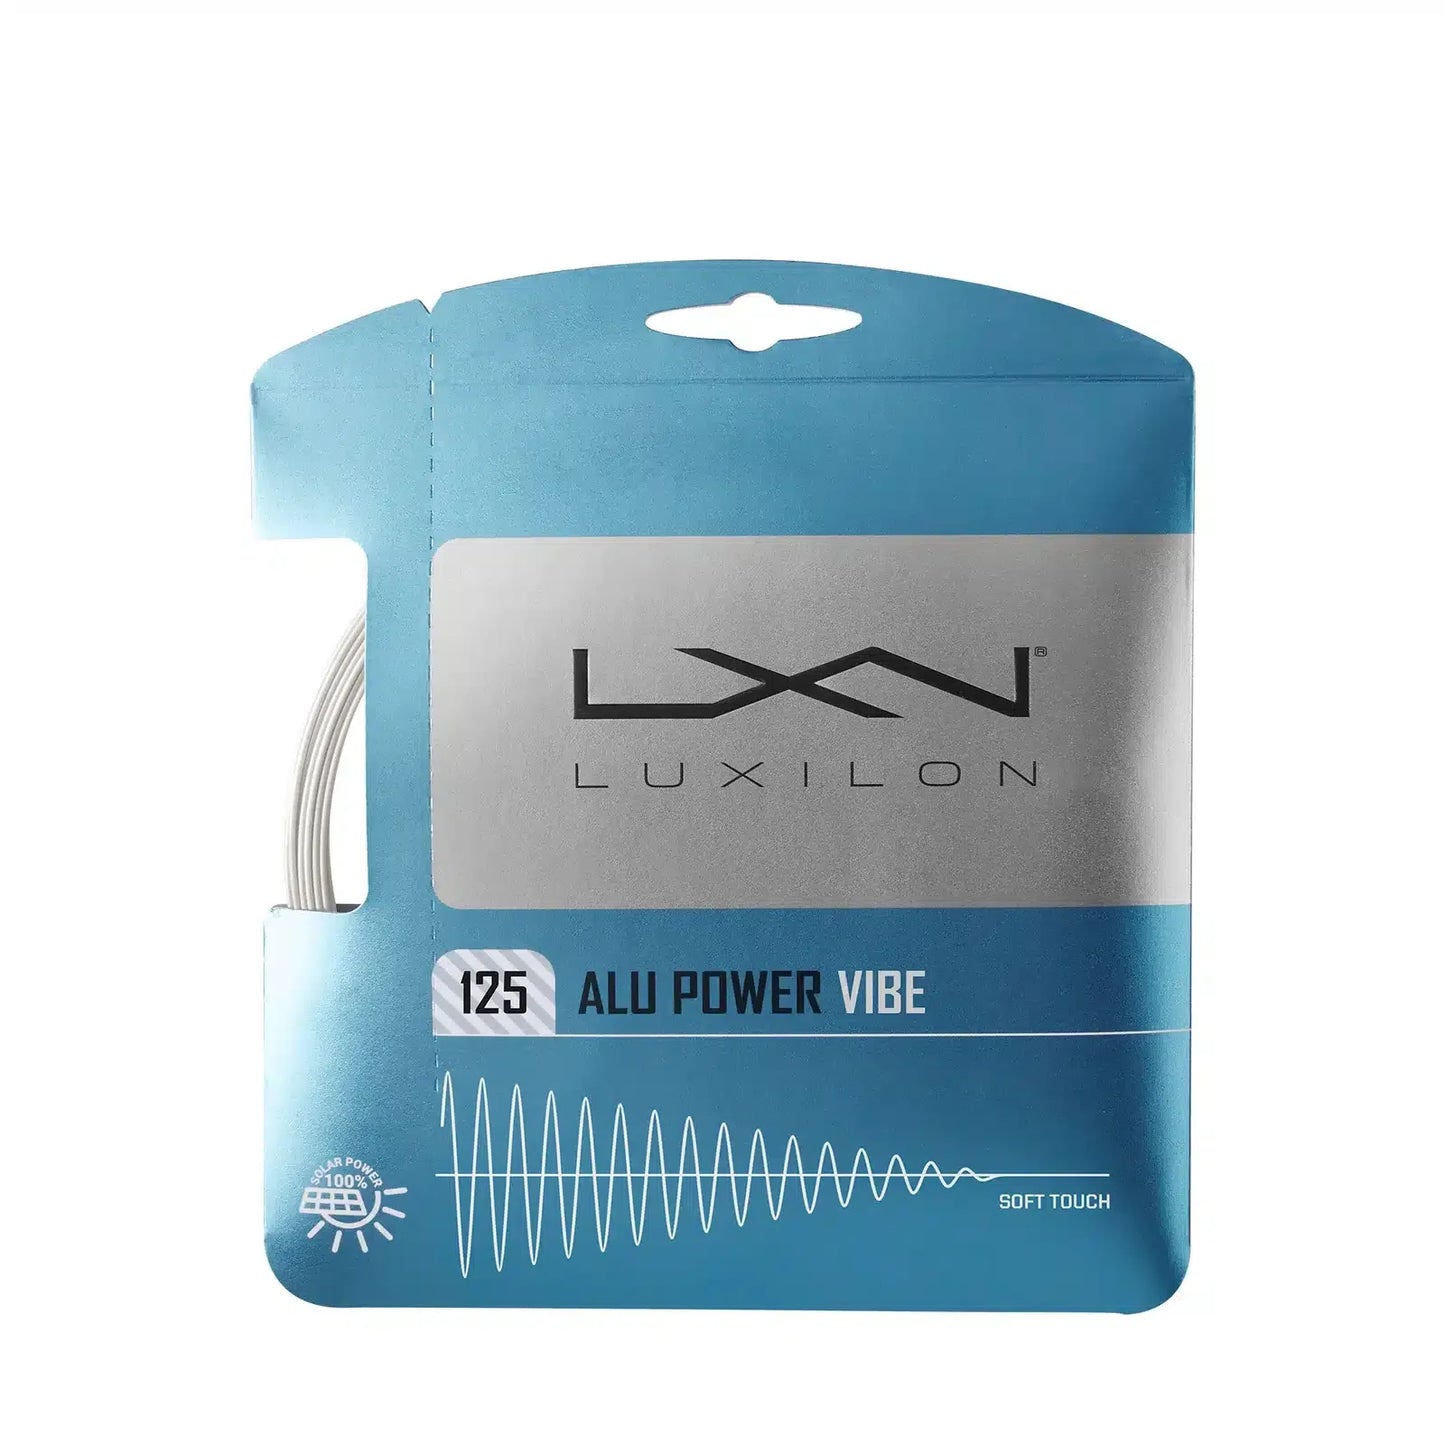 Luxilon Alu Power Vibe 1.25 Set